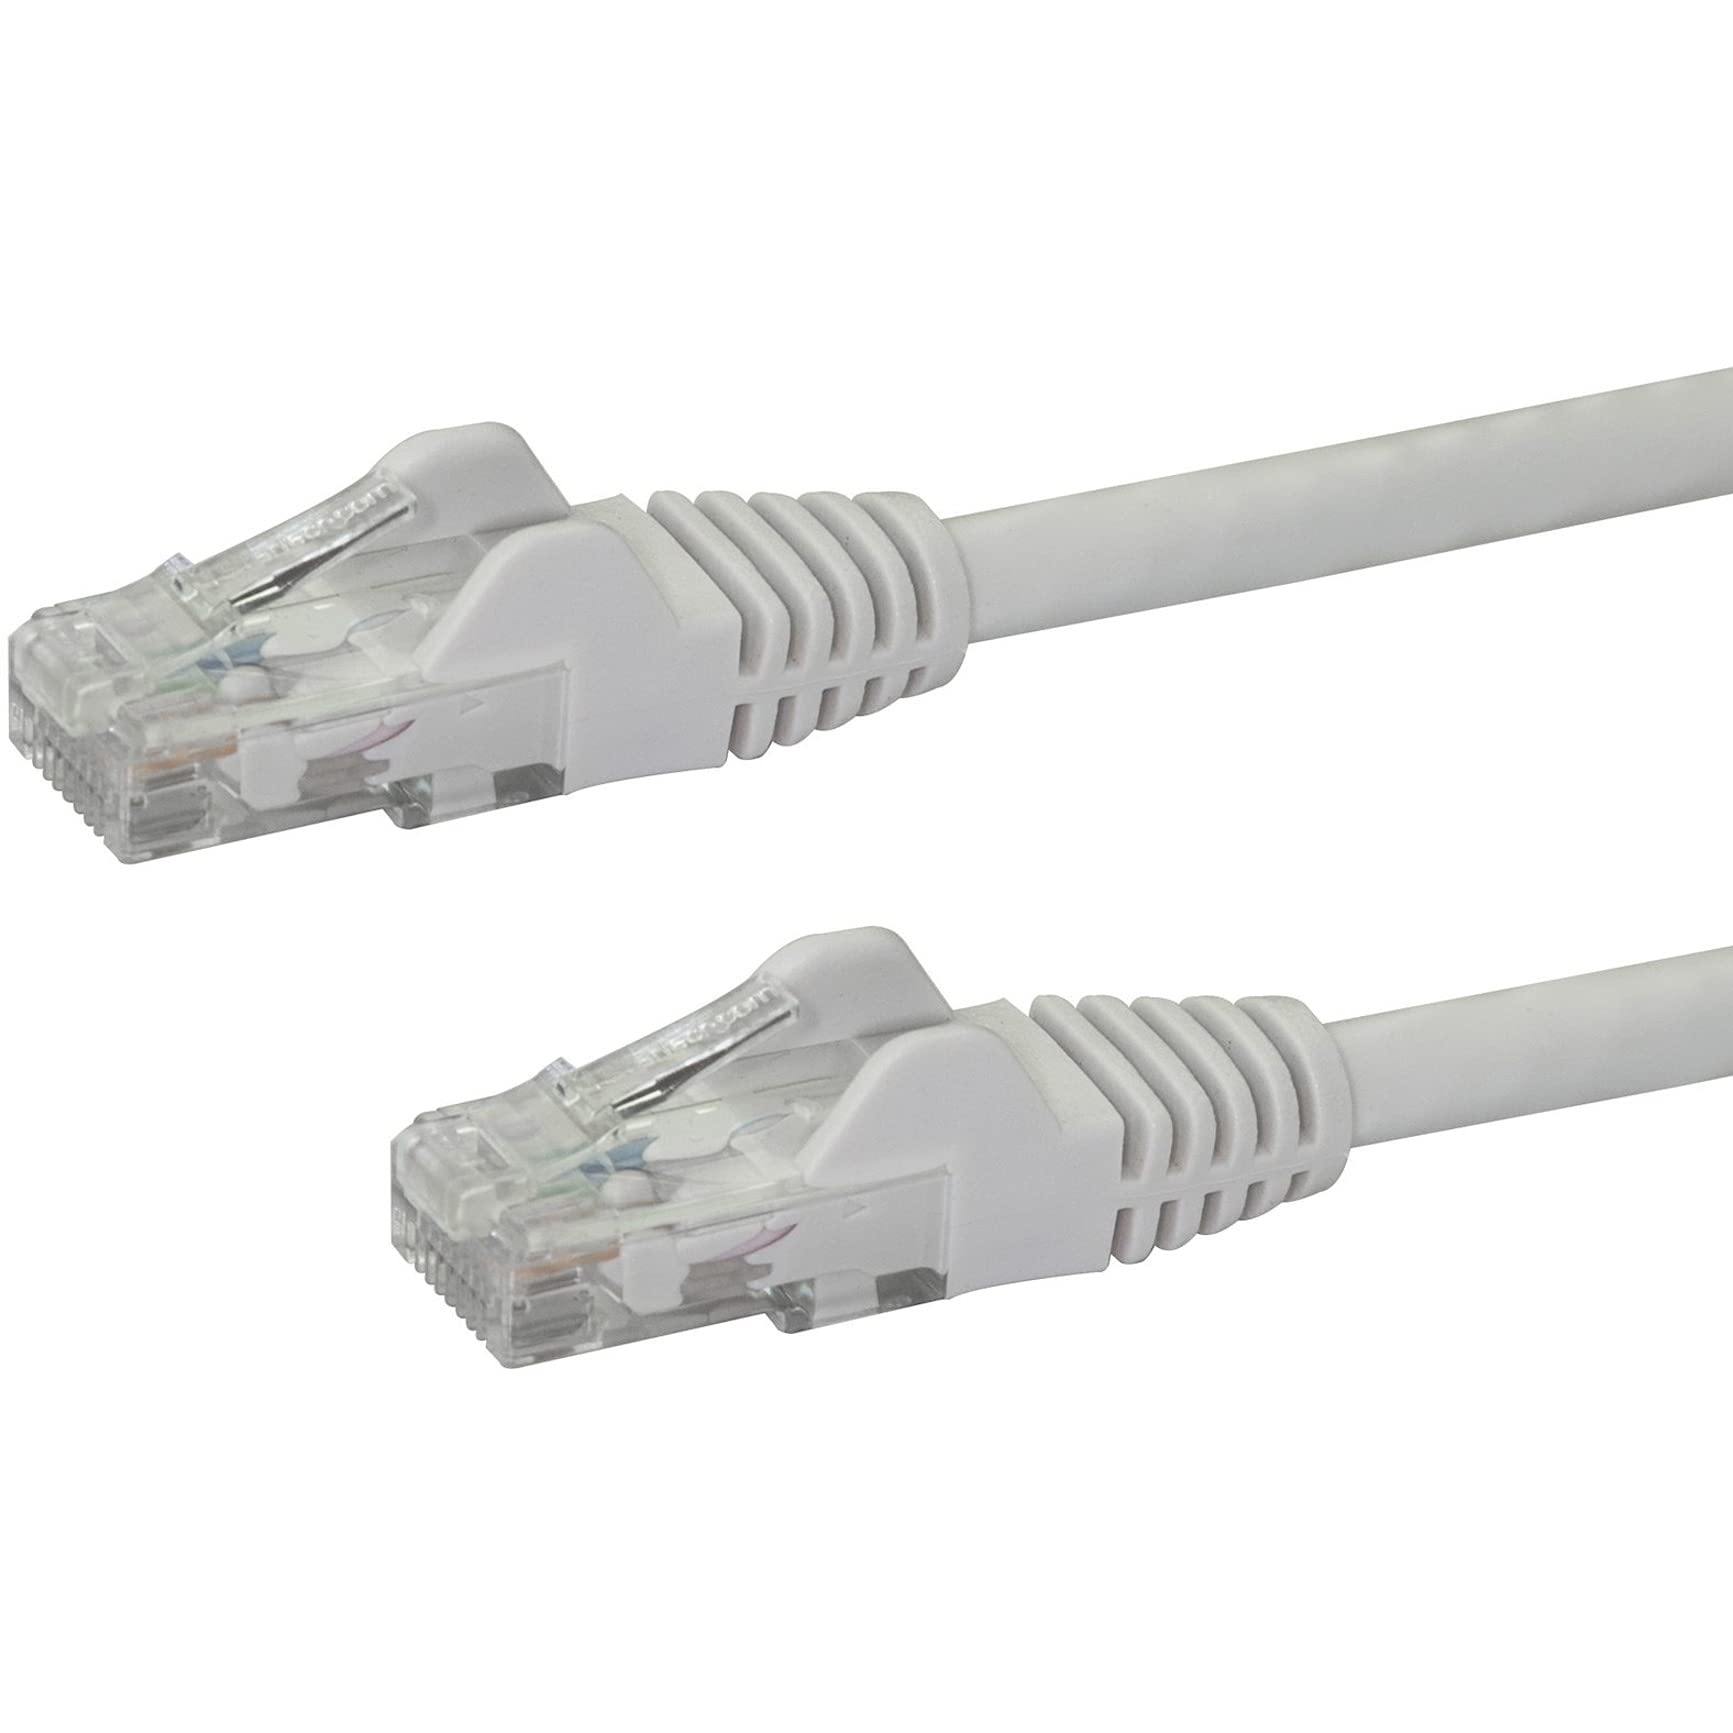 StarTech.com 30m Netzwerkkabel CAT6 - 1Gbit 650MHz 100W POE RJ45 U/UTP Snagless LAN-Patch Kabel mit Knickschutz - Grün, Fluke Geprüft, 24AWG, TIA/UL, Internet/Ethernet Kabel (N6PATCH100WH)